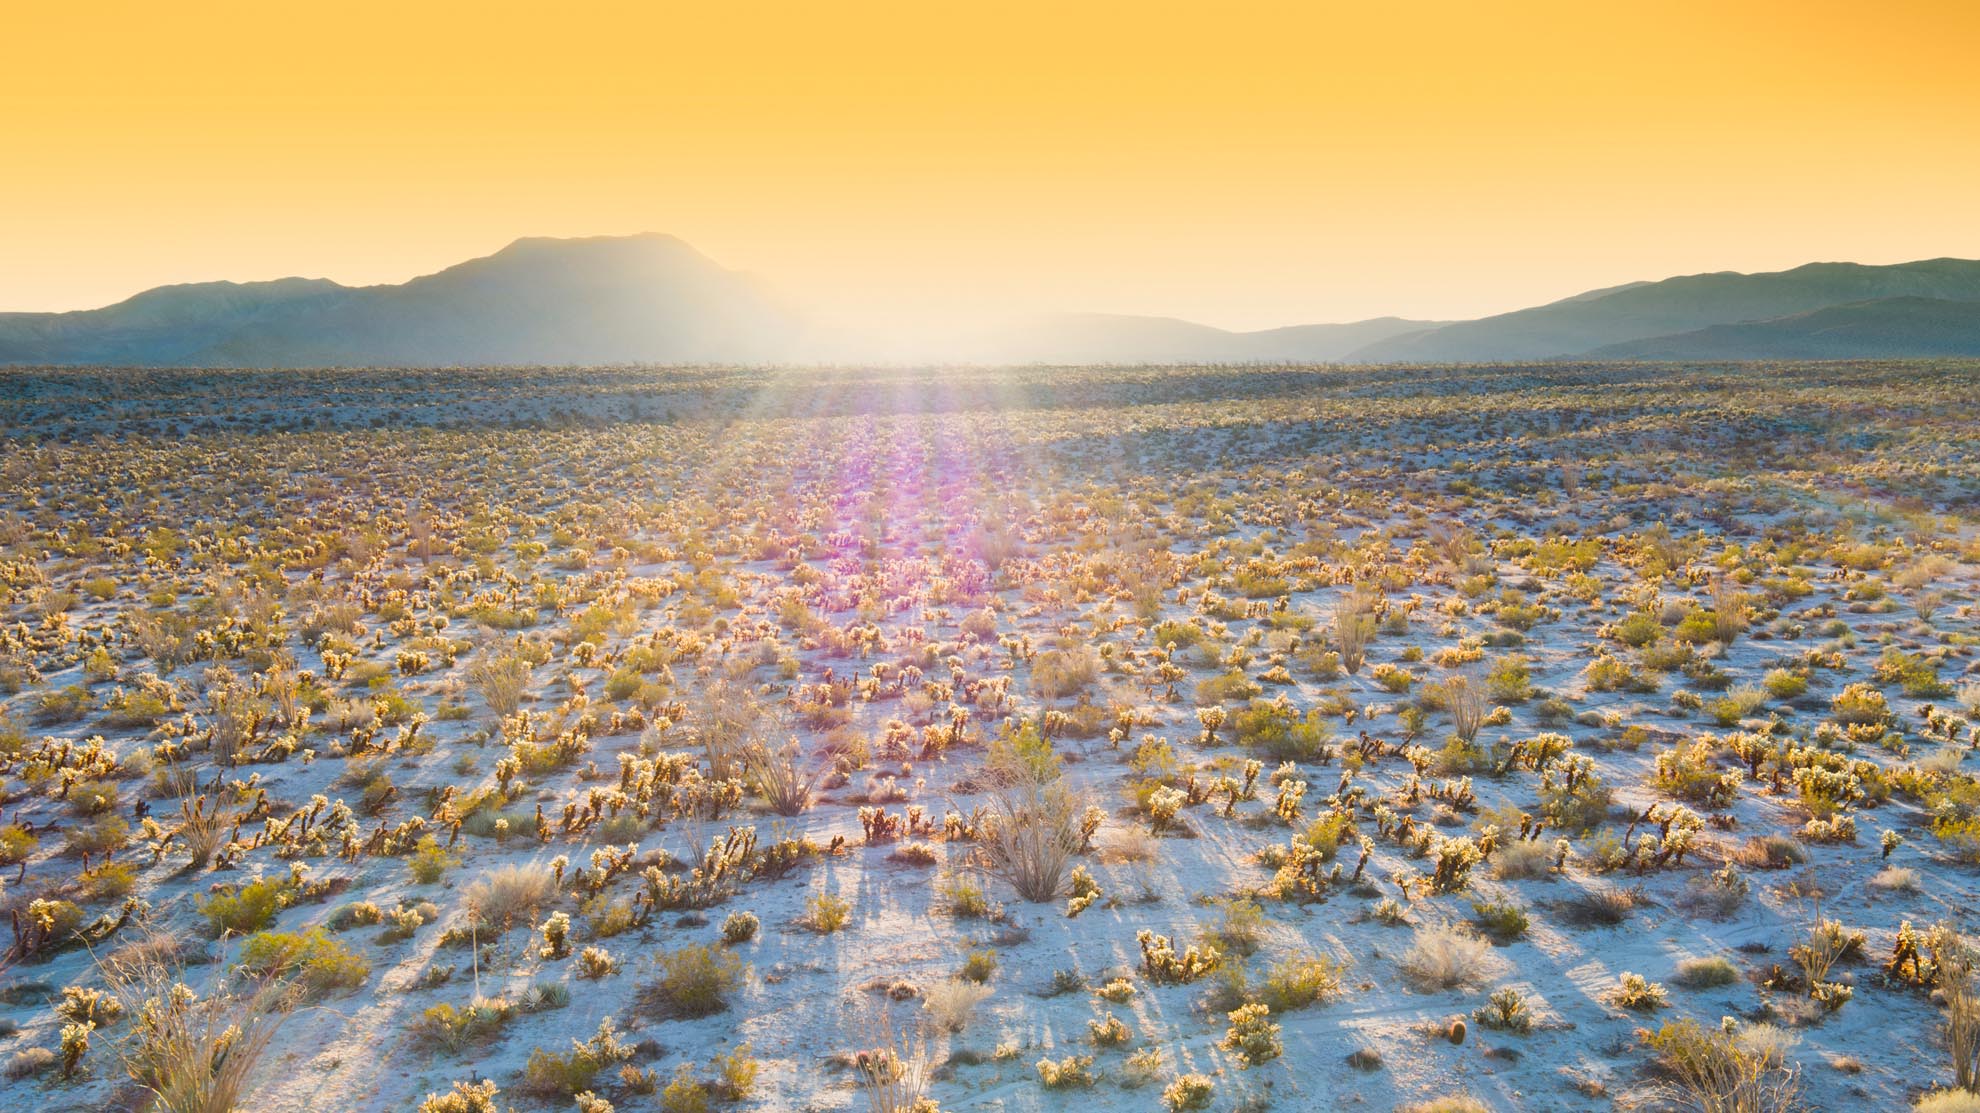 Drone Photograph of California Desert at sunrise